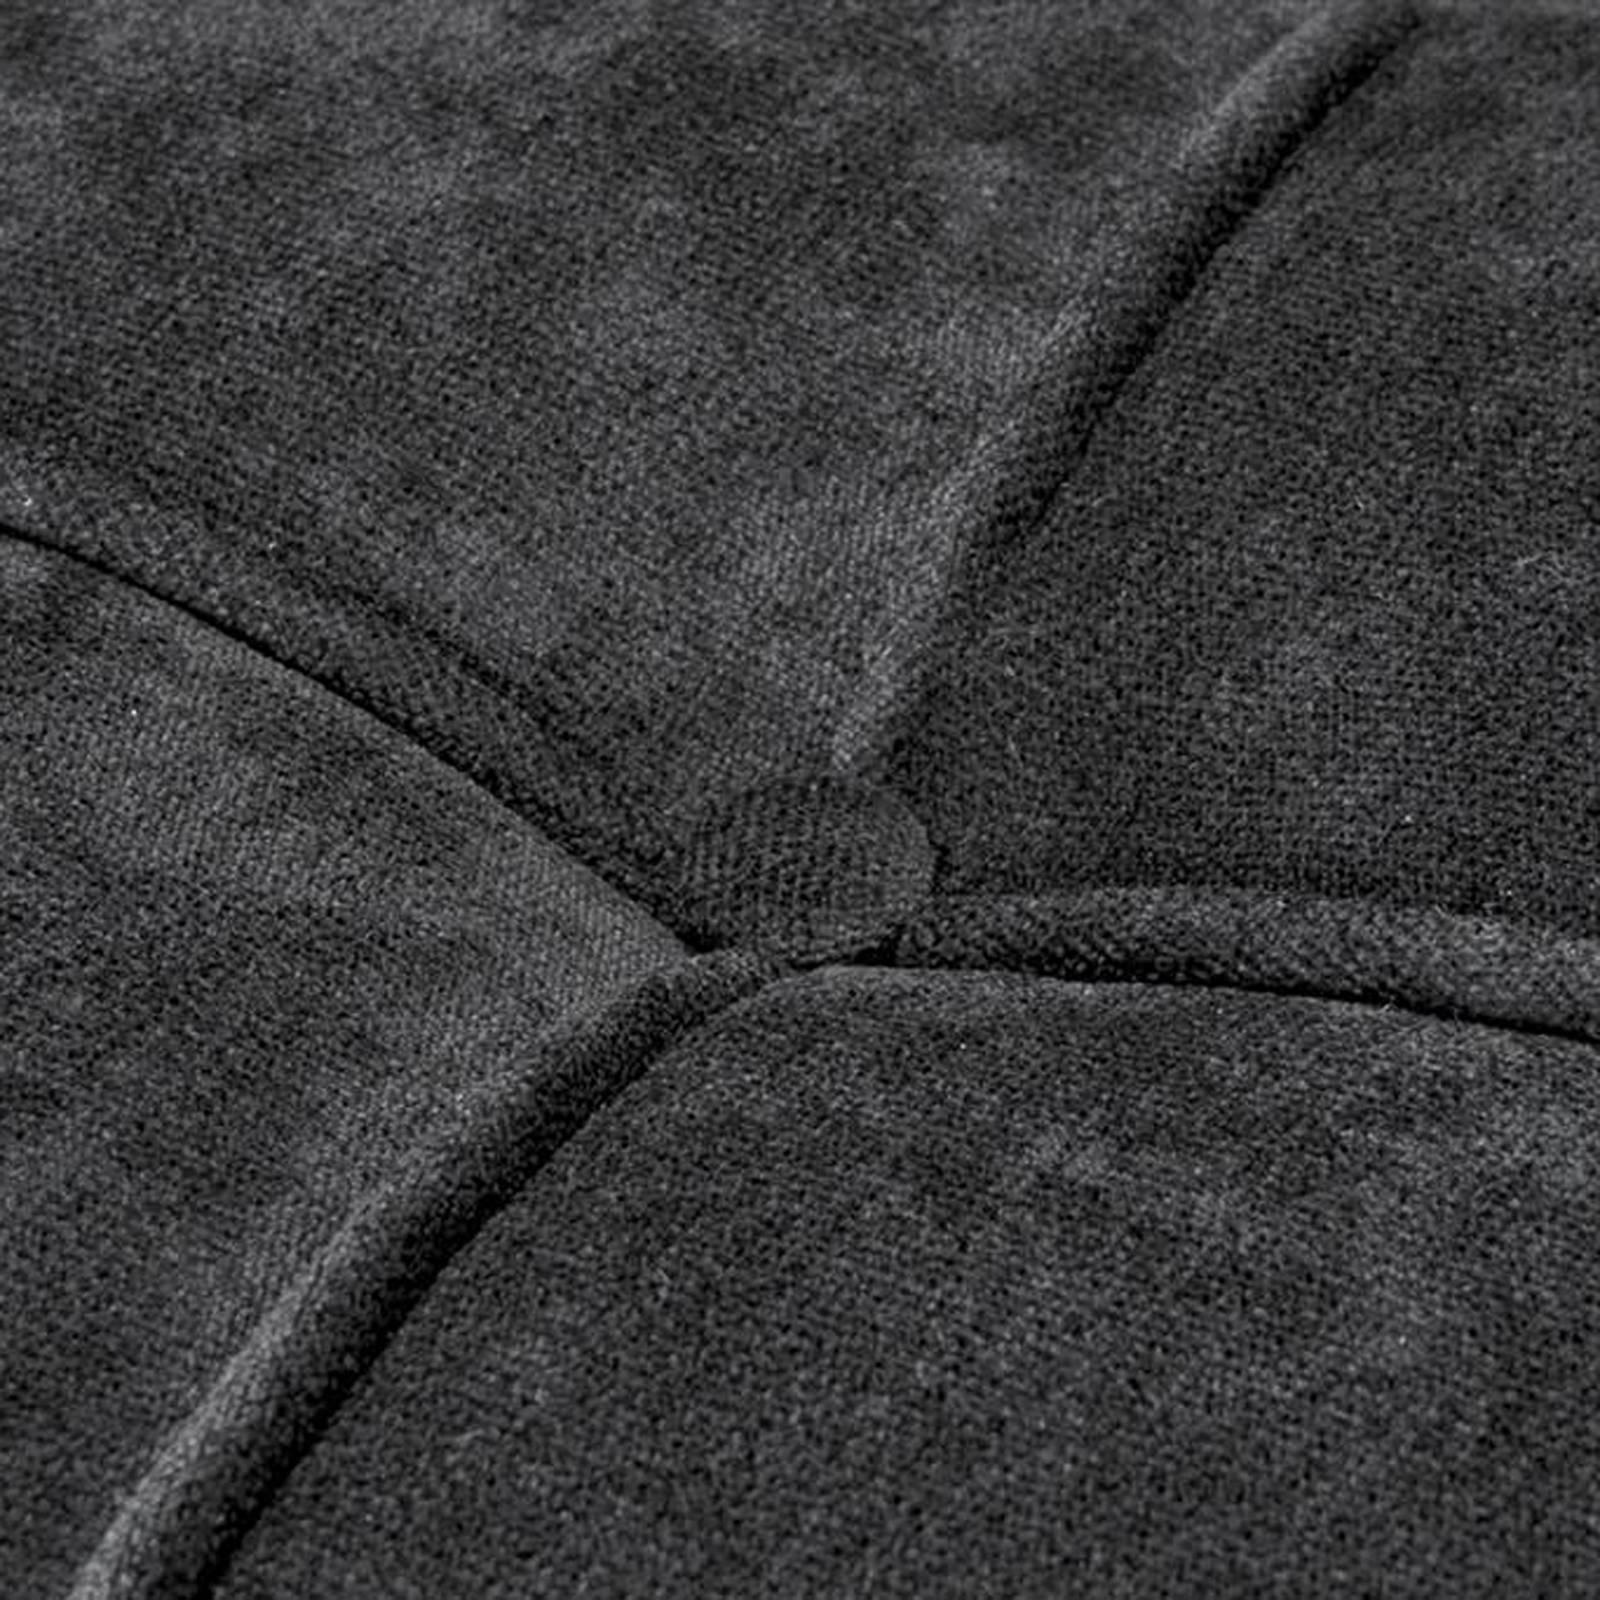 Hand-Crafted Sander Sofa in Black, Greige or Ecru Velvet Fabric